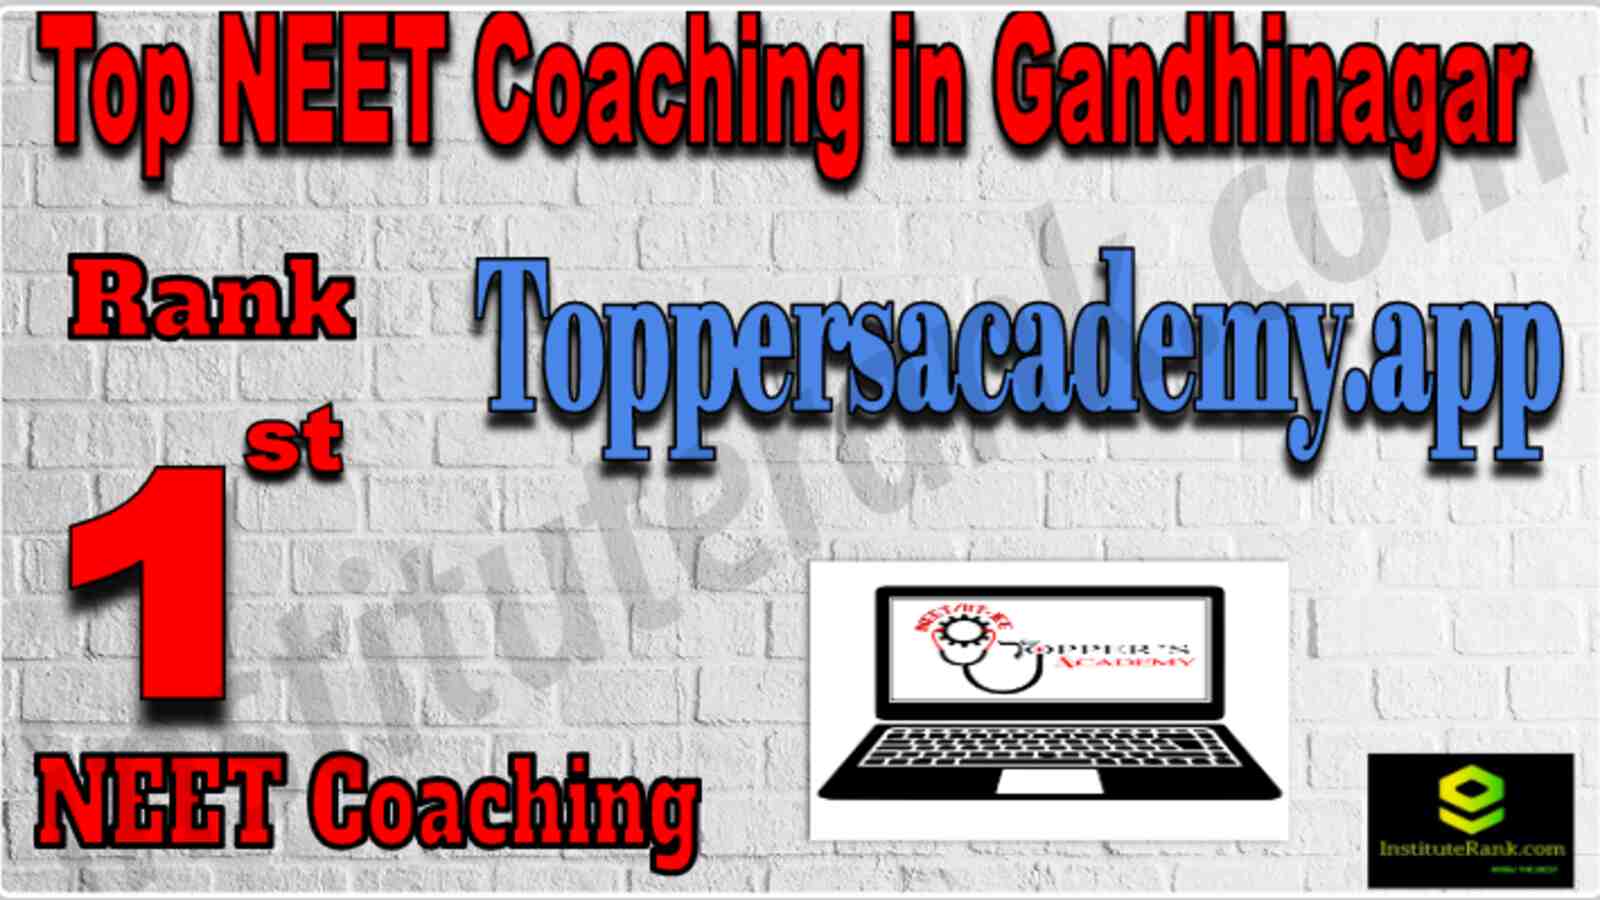 Rank 1 Top NEET Coaching in Gandhinagar